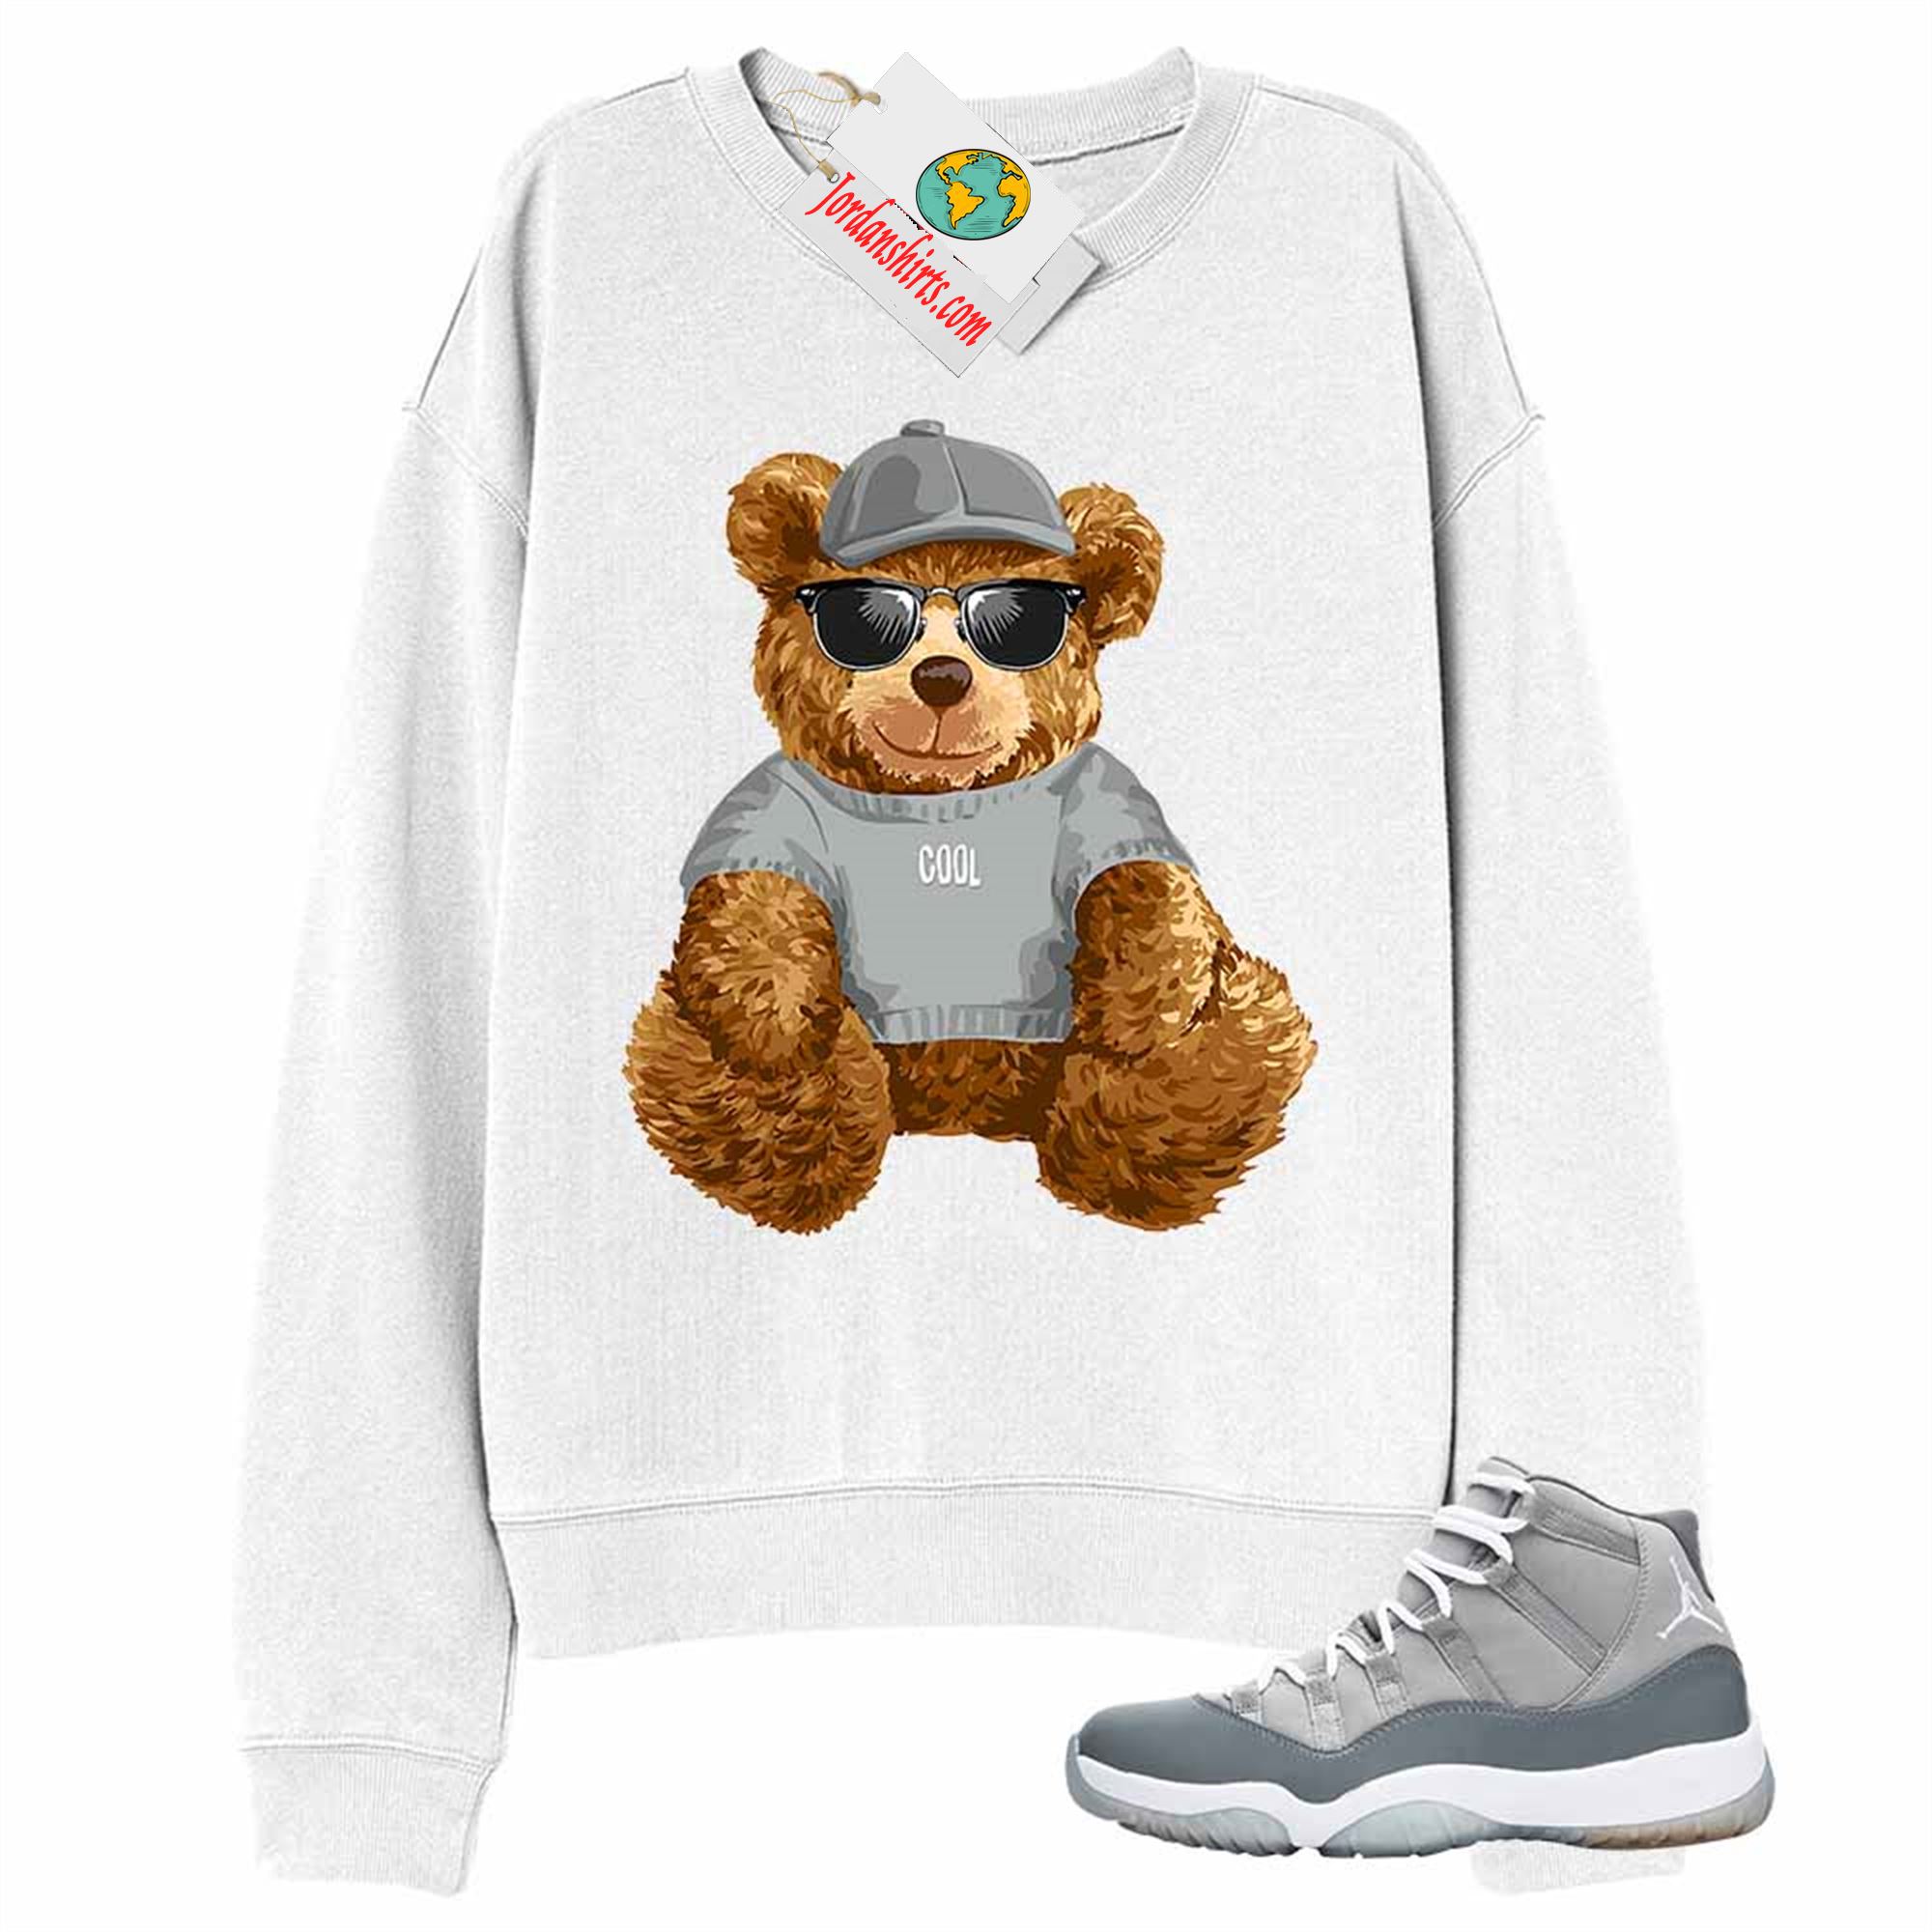 Jordan 11 Sweatshirt, Teddy Bear With Sunglasses _ Hat White Sweatshirt Air Jordan 11 Cool Grey 11s Size Up To 5xl